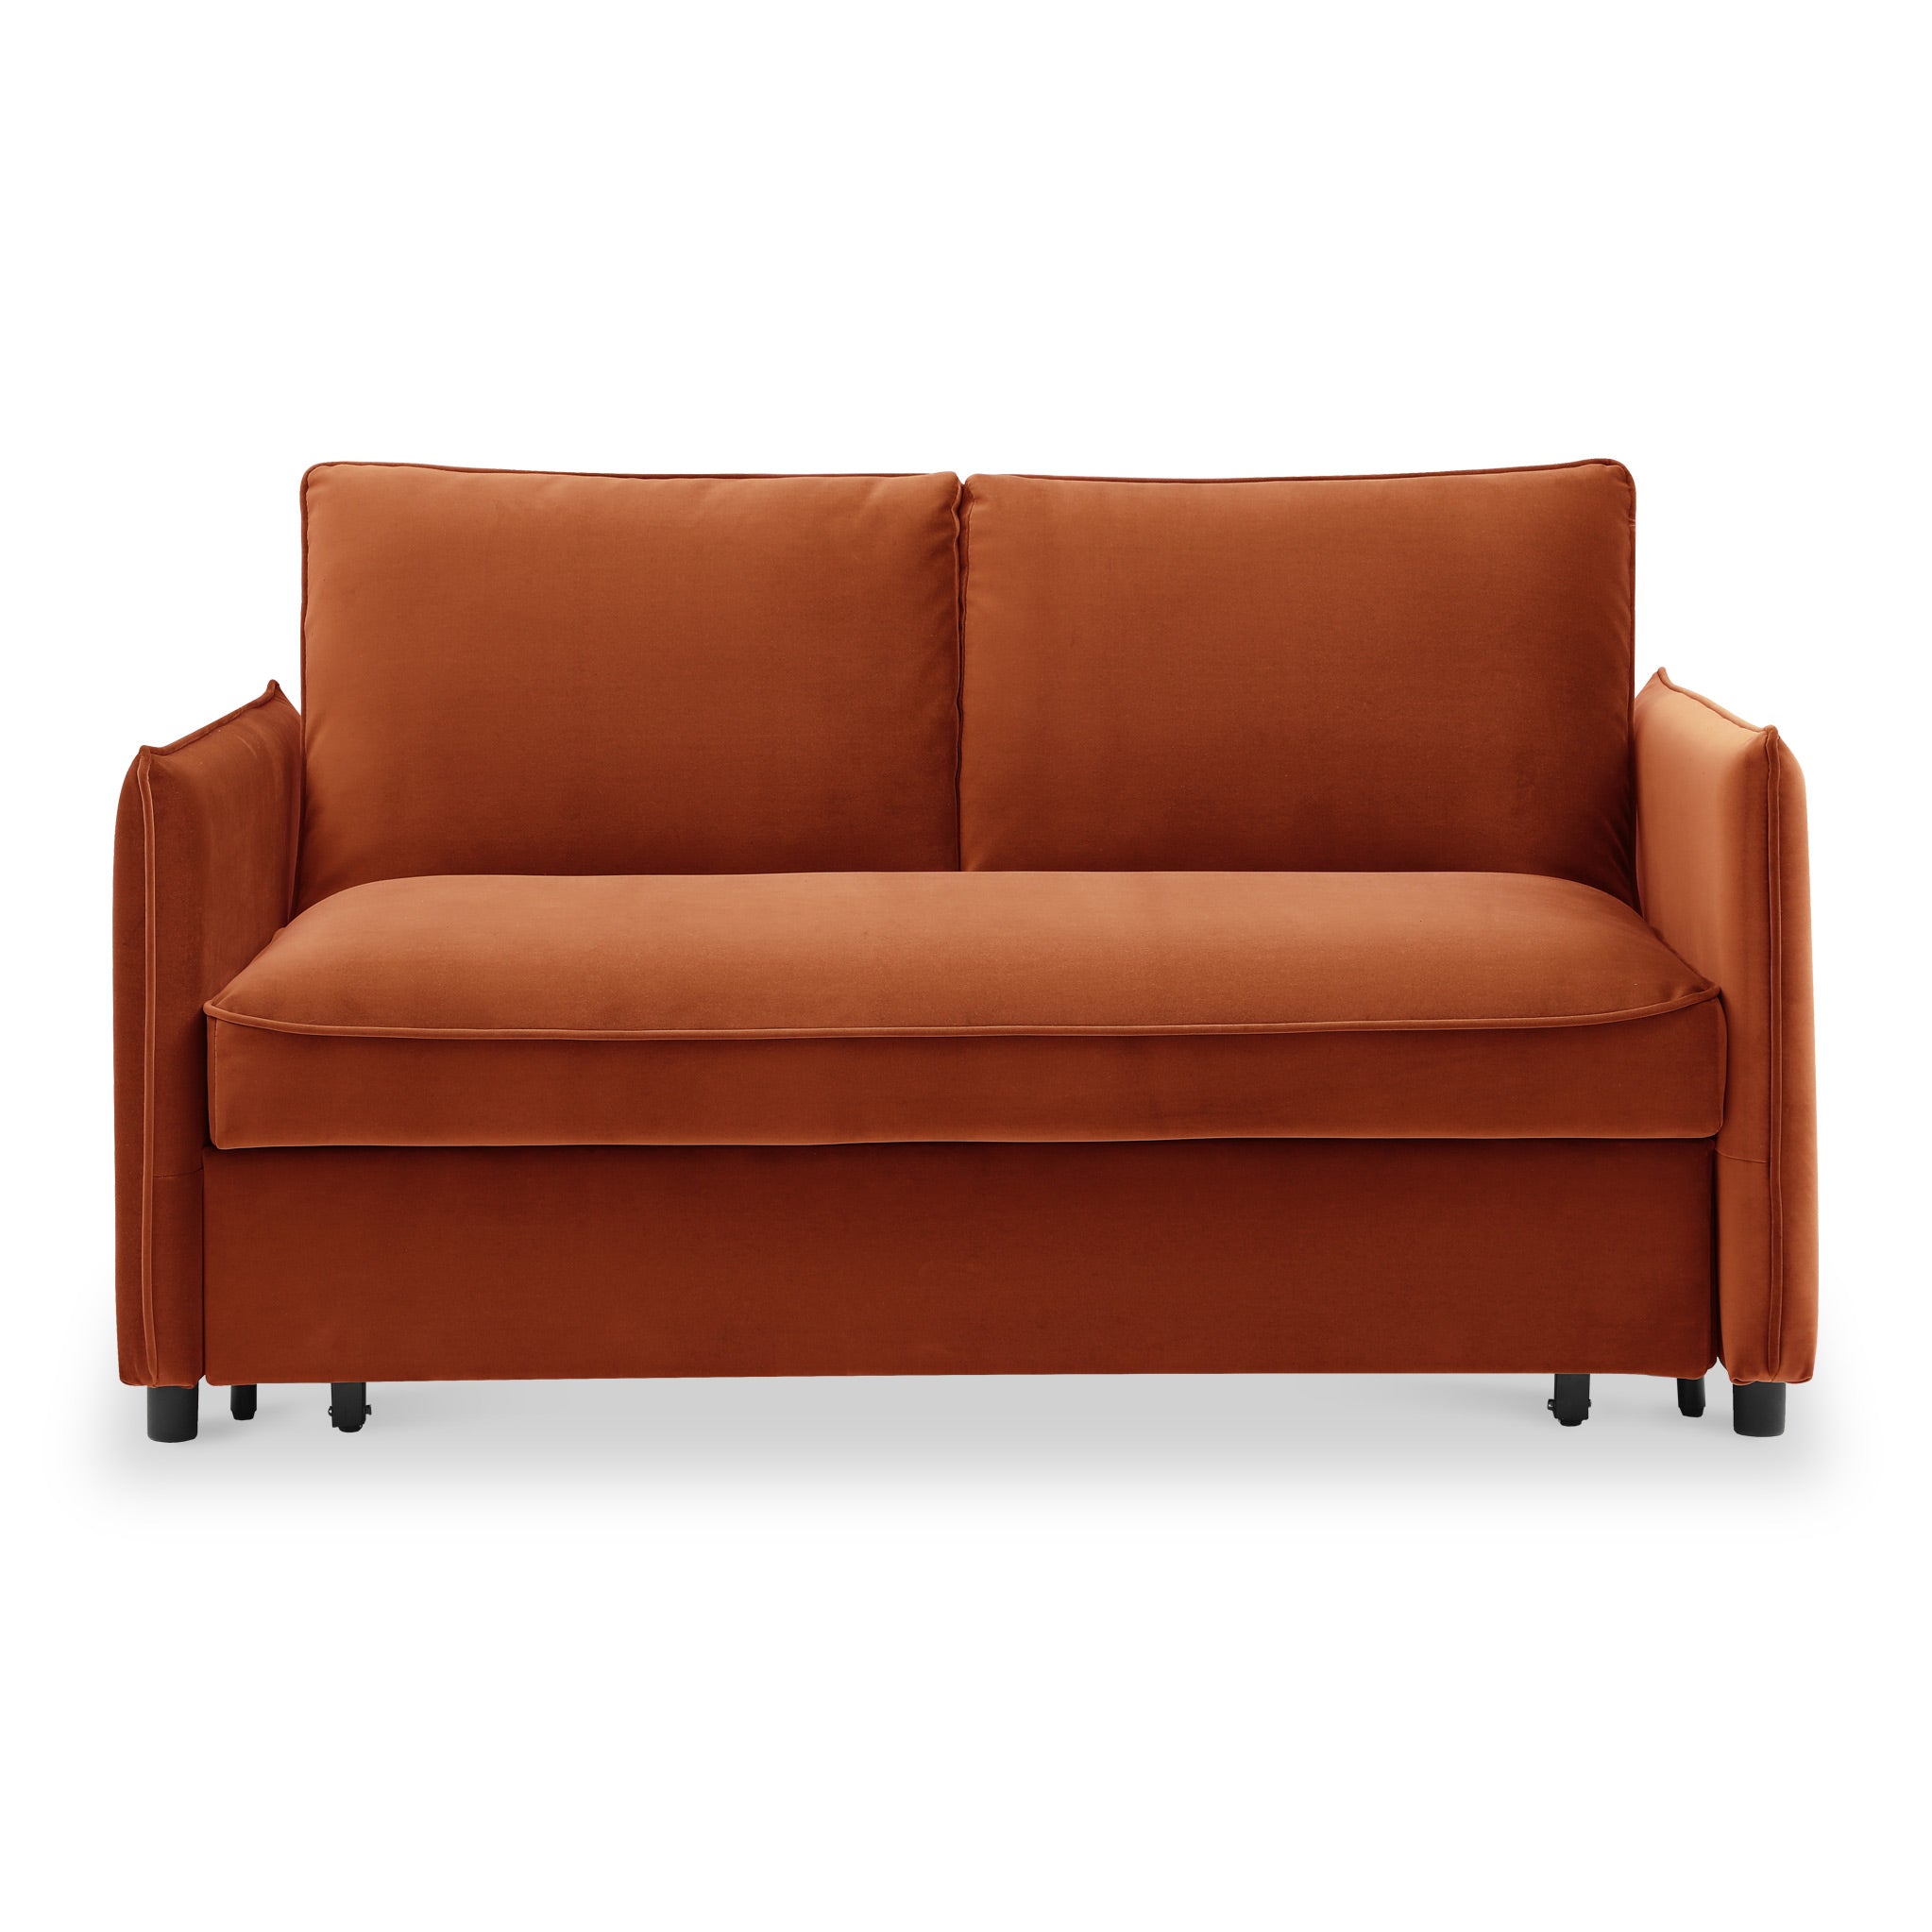 Thalia 2 Seater Velvet Sofa Bed Grey Olive Or Orange Roseland